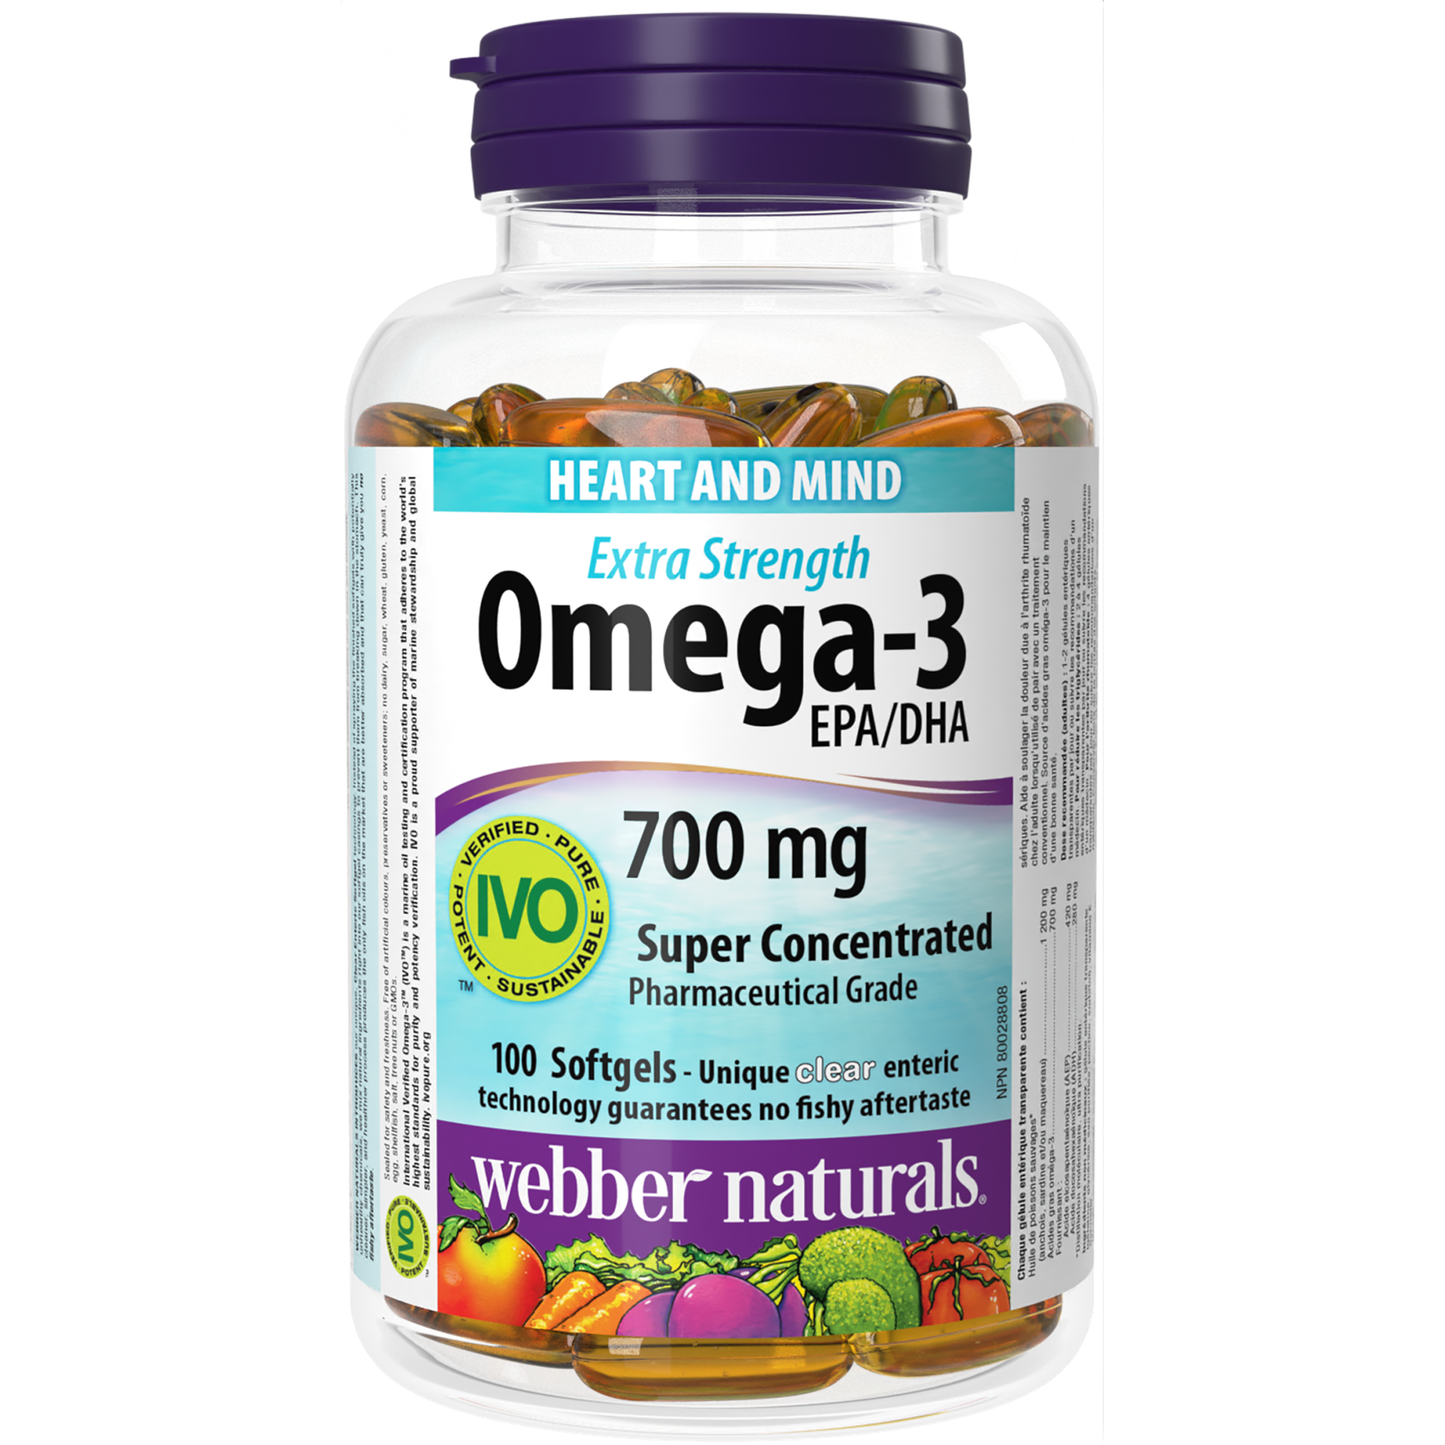 Omega-3 Extra Strength 700 mg EPA/DHA for Webber Naturals|v|hi-res|WN3397